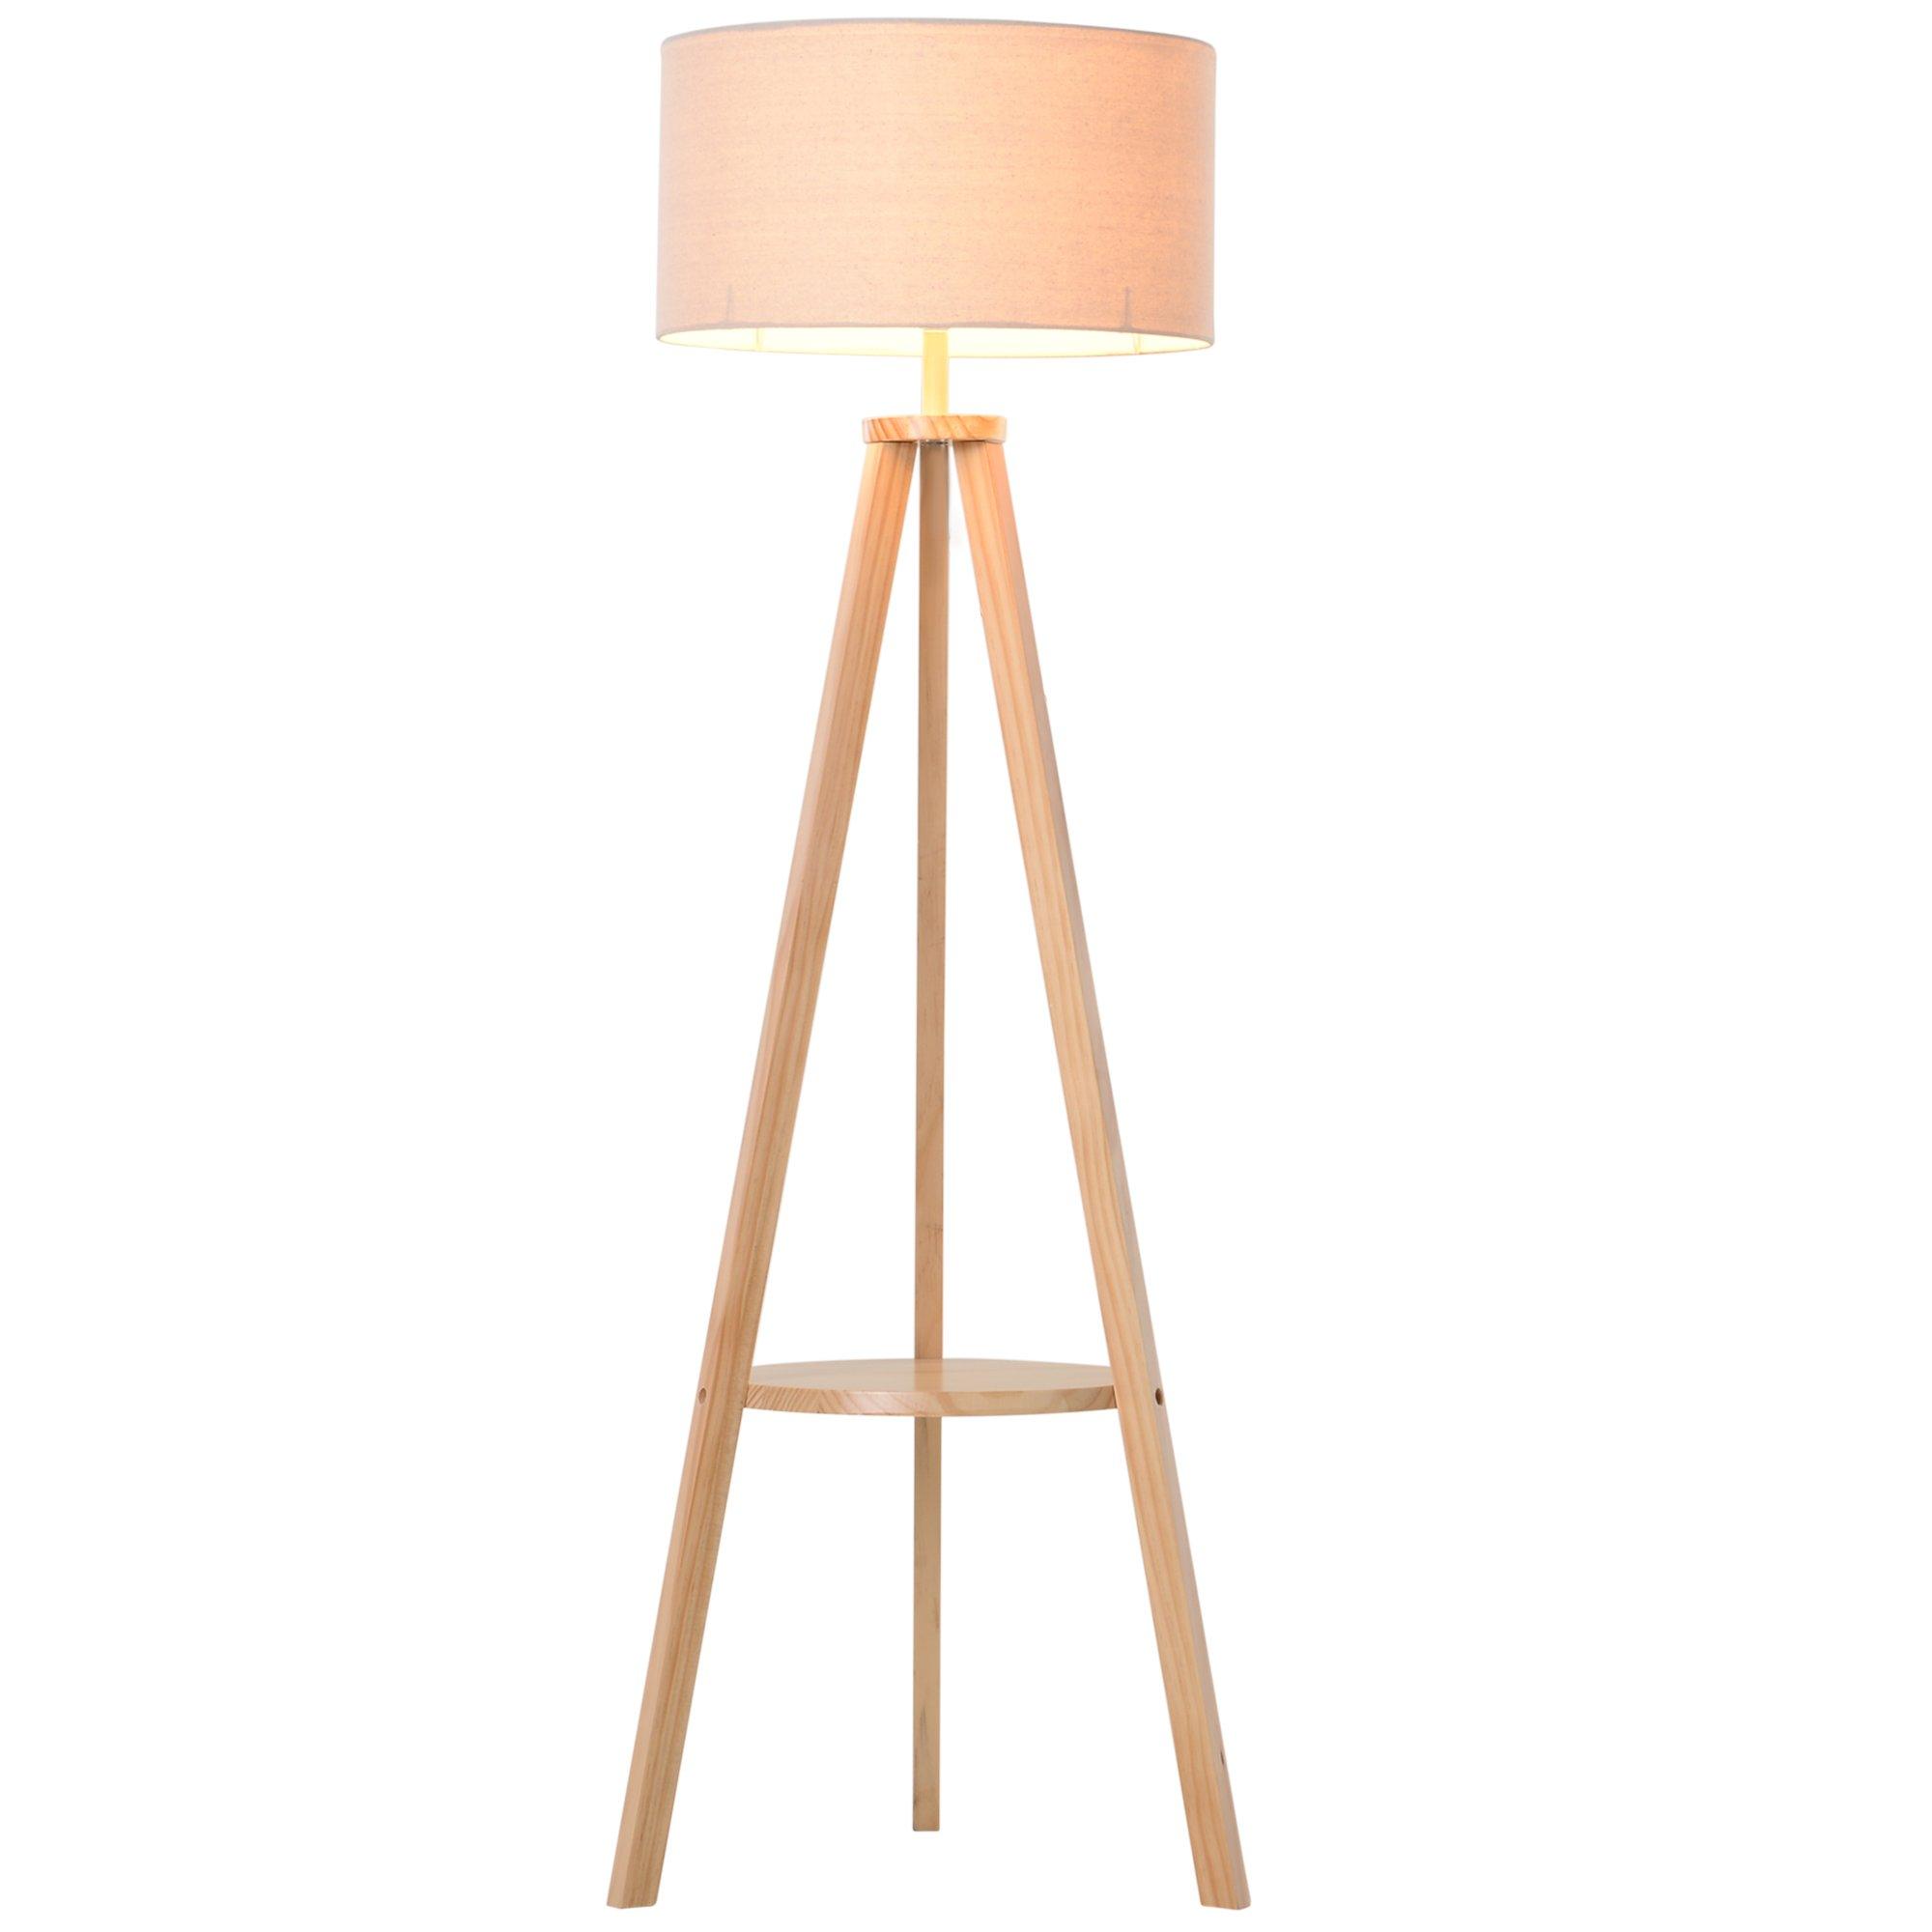 Bedside Light Free Standing Floor Lamp Tripod Holder Storage Shelf